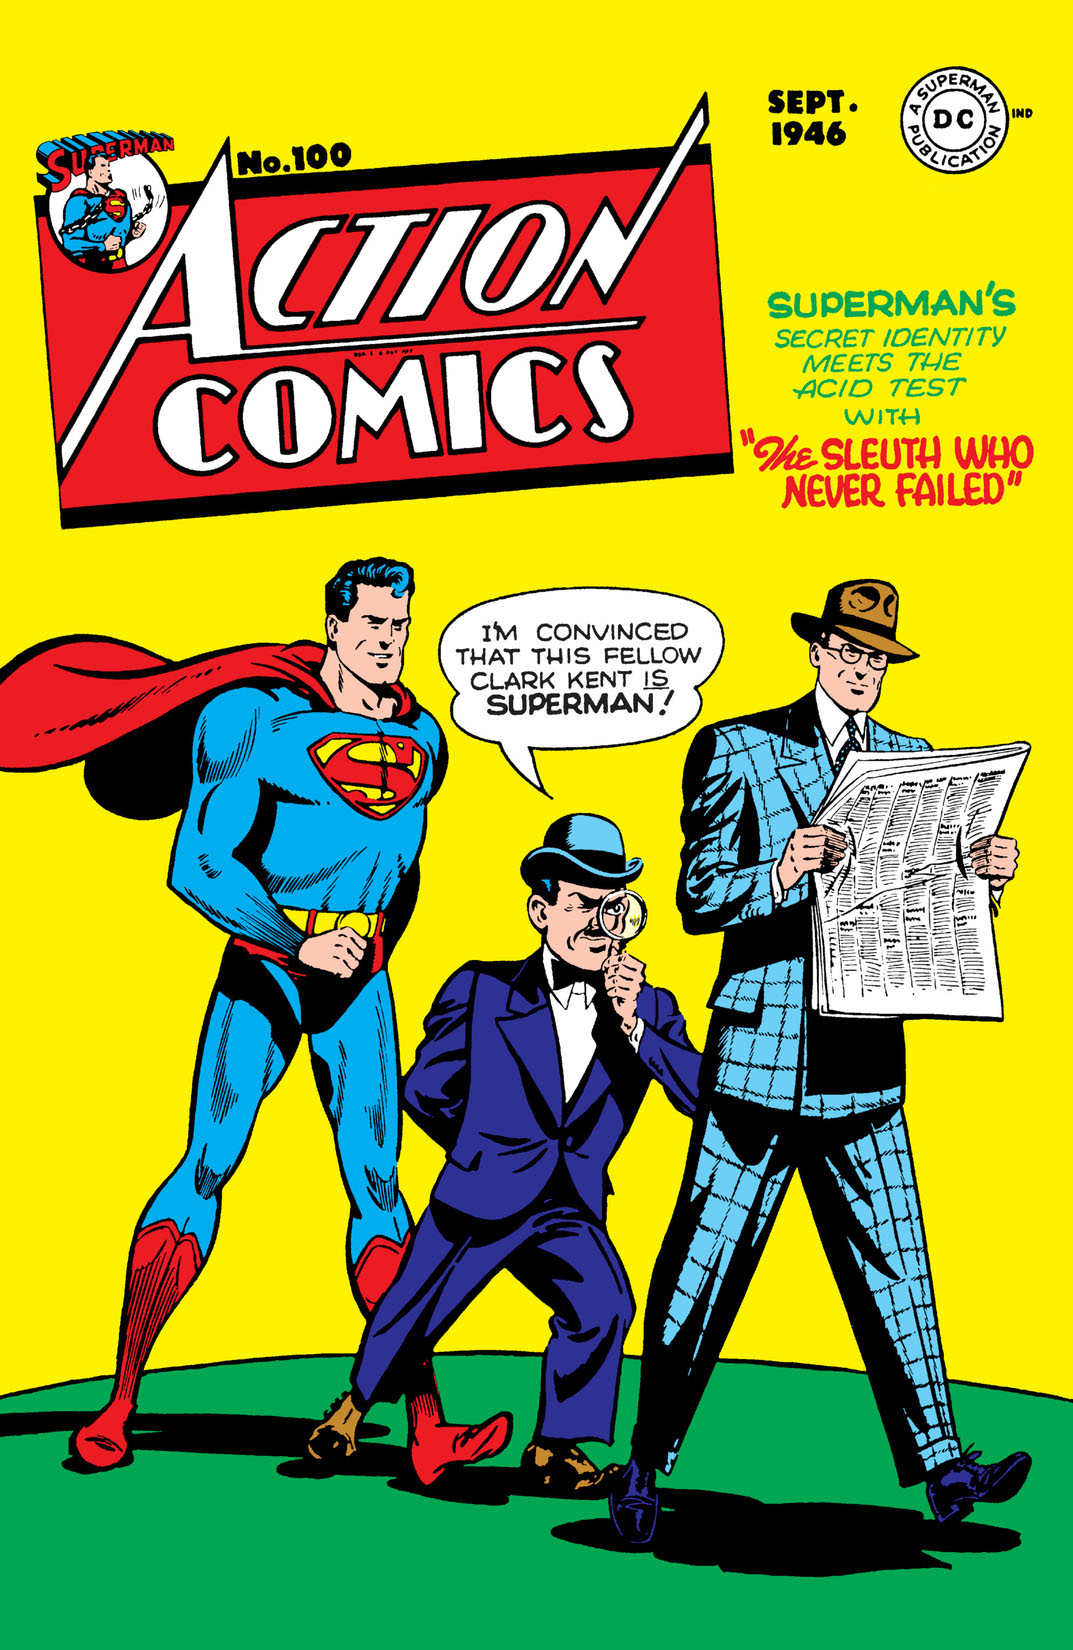 Action Comics (1938-) #100 preview images